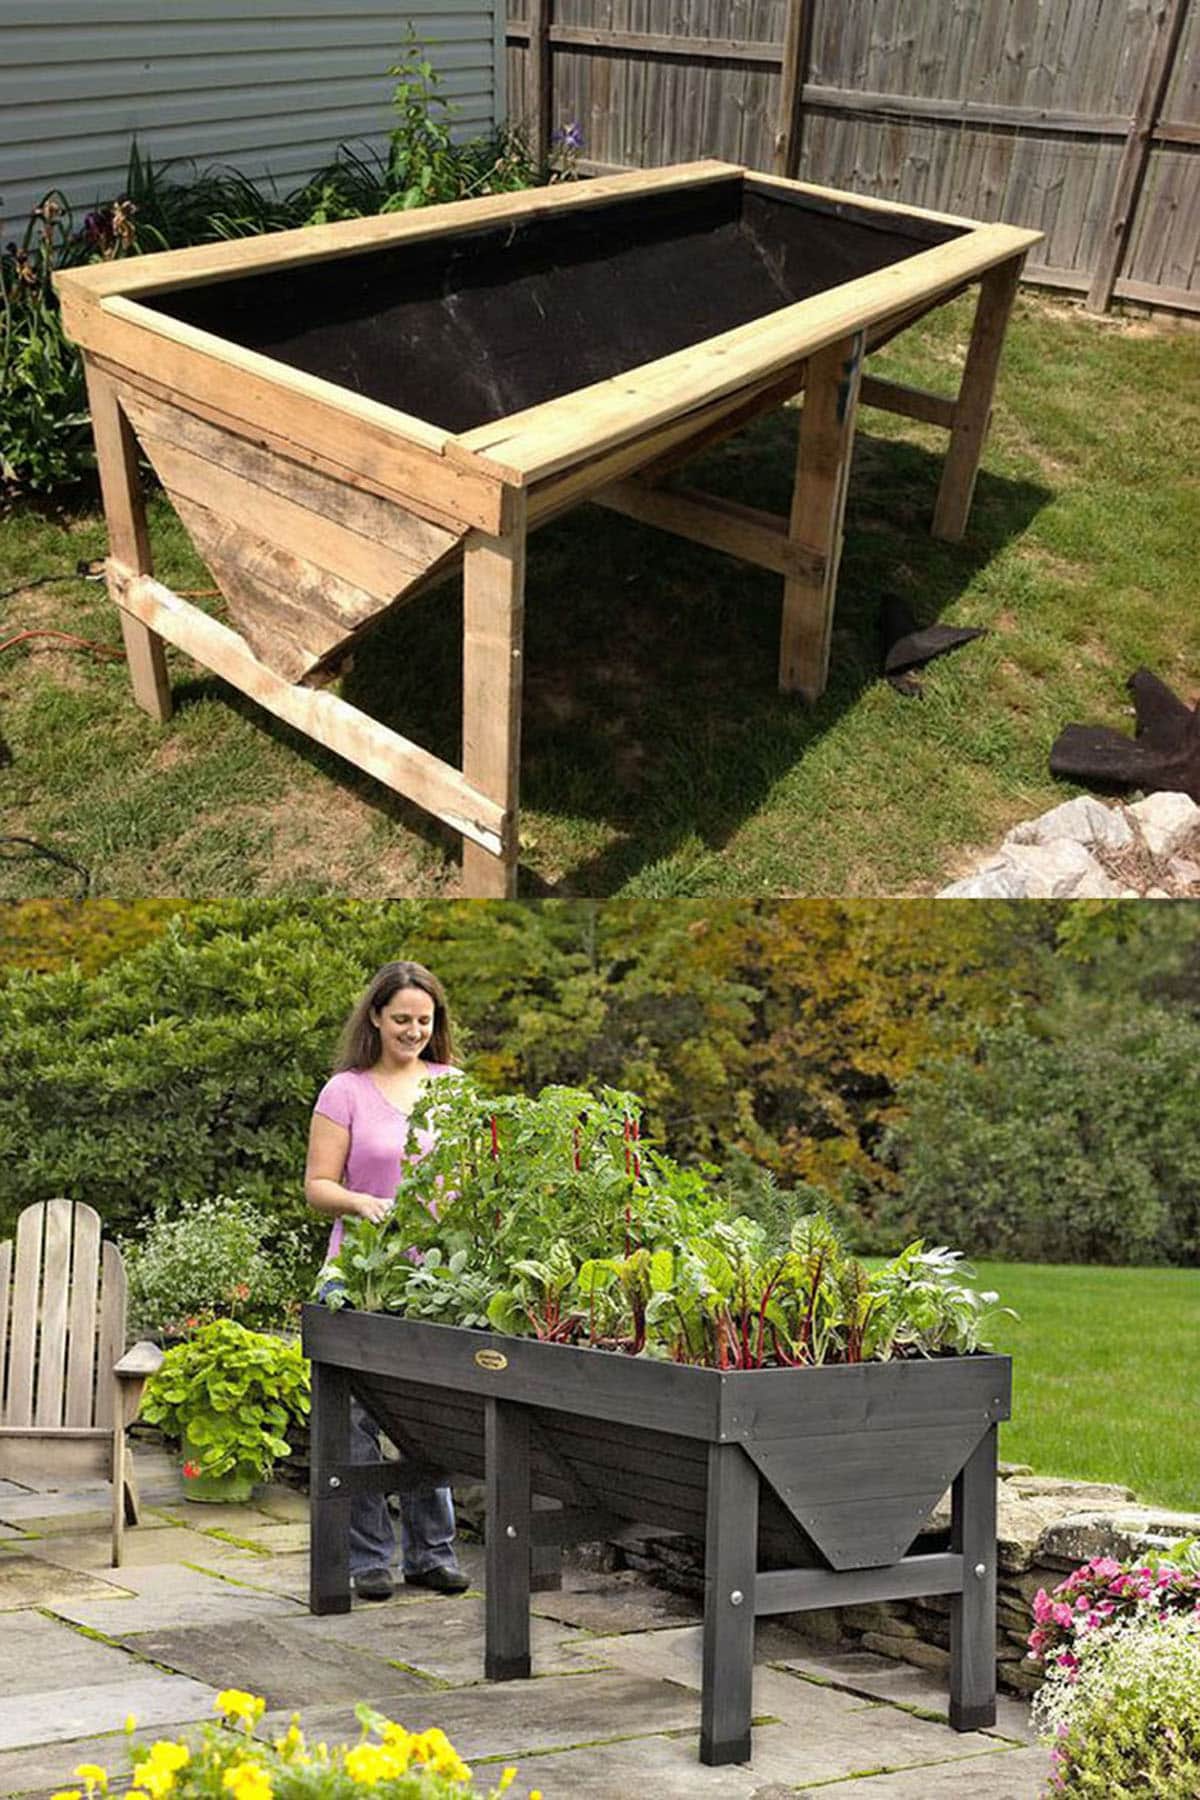 https://www.apieceofrainbow.com/wp-content/uploads/2022/01/diy-raised-bed-gardens-ideas-designs-build-garden-boxes-planters-elevated-beds-wood-pallets-cinder-block-flowers-vegetable-gardening-apieceofrainbow-12.jpg